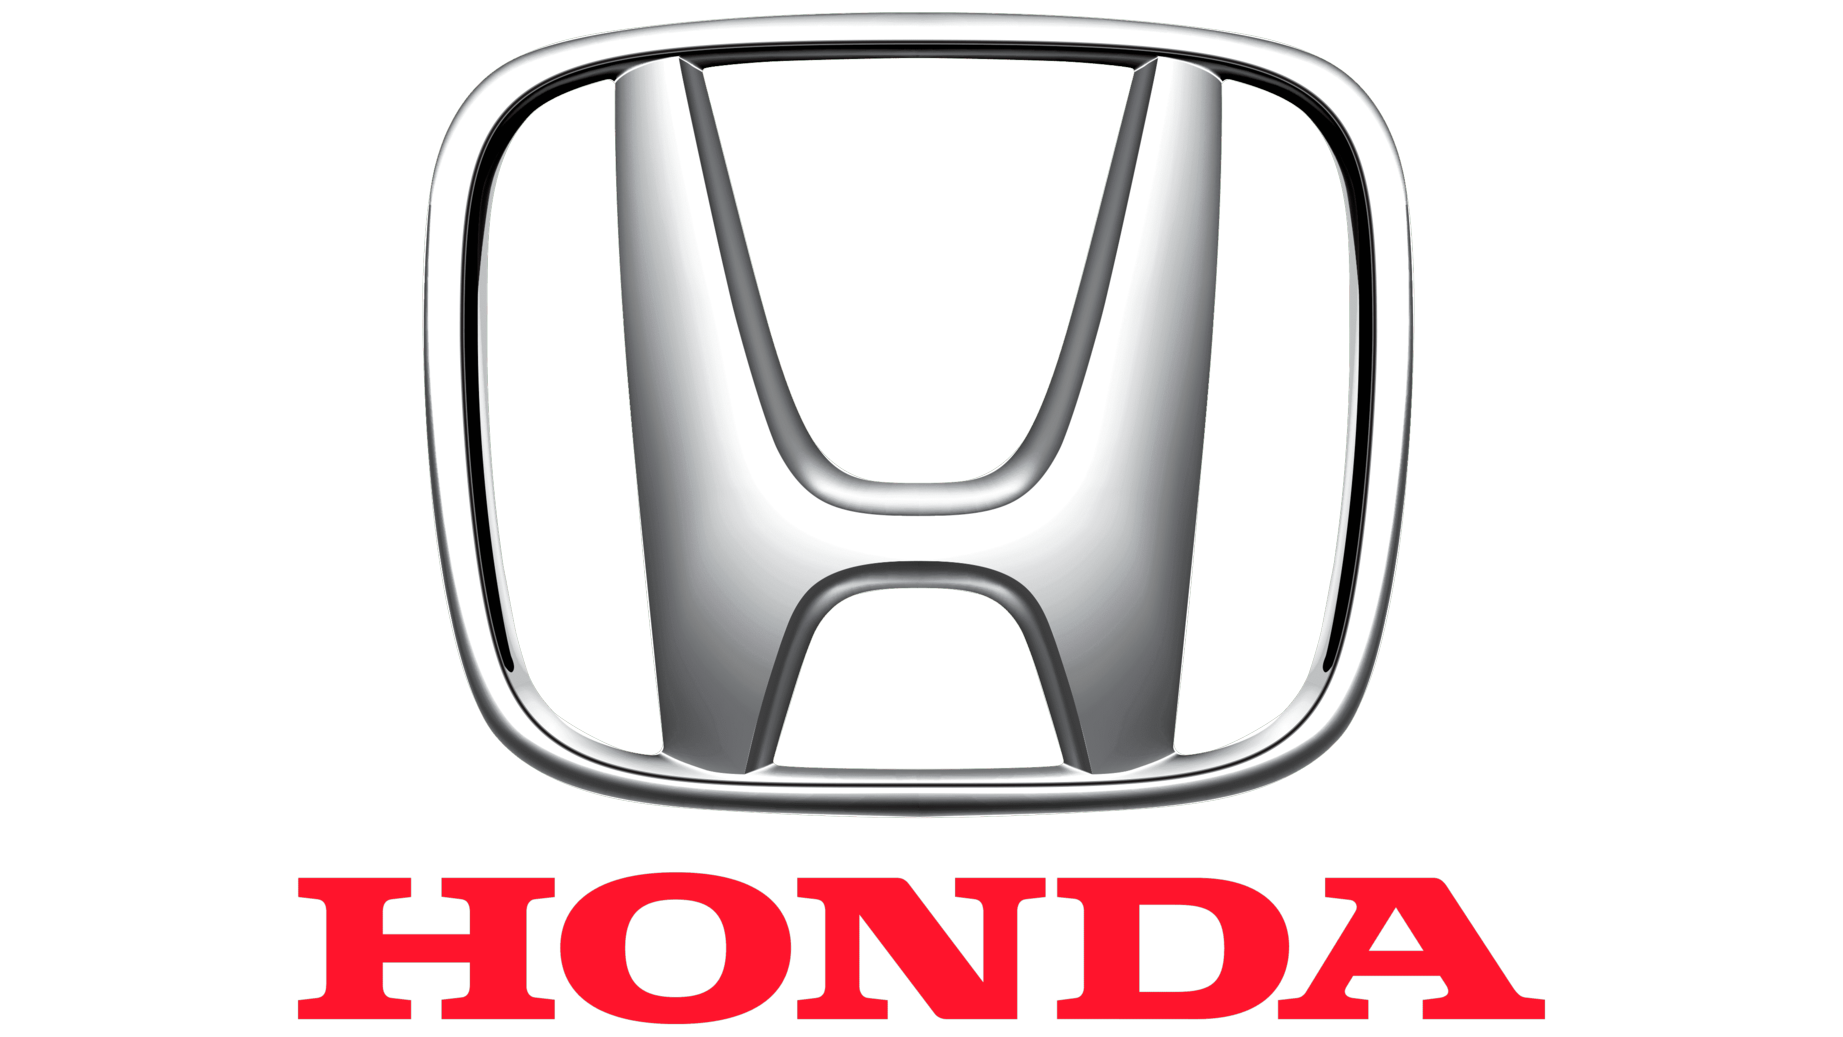 Honda sign